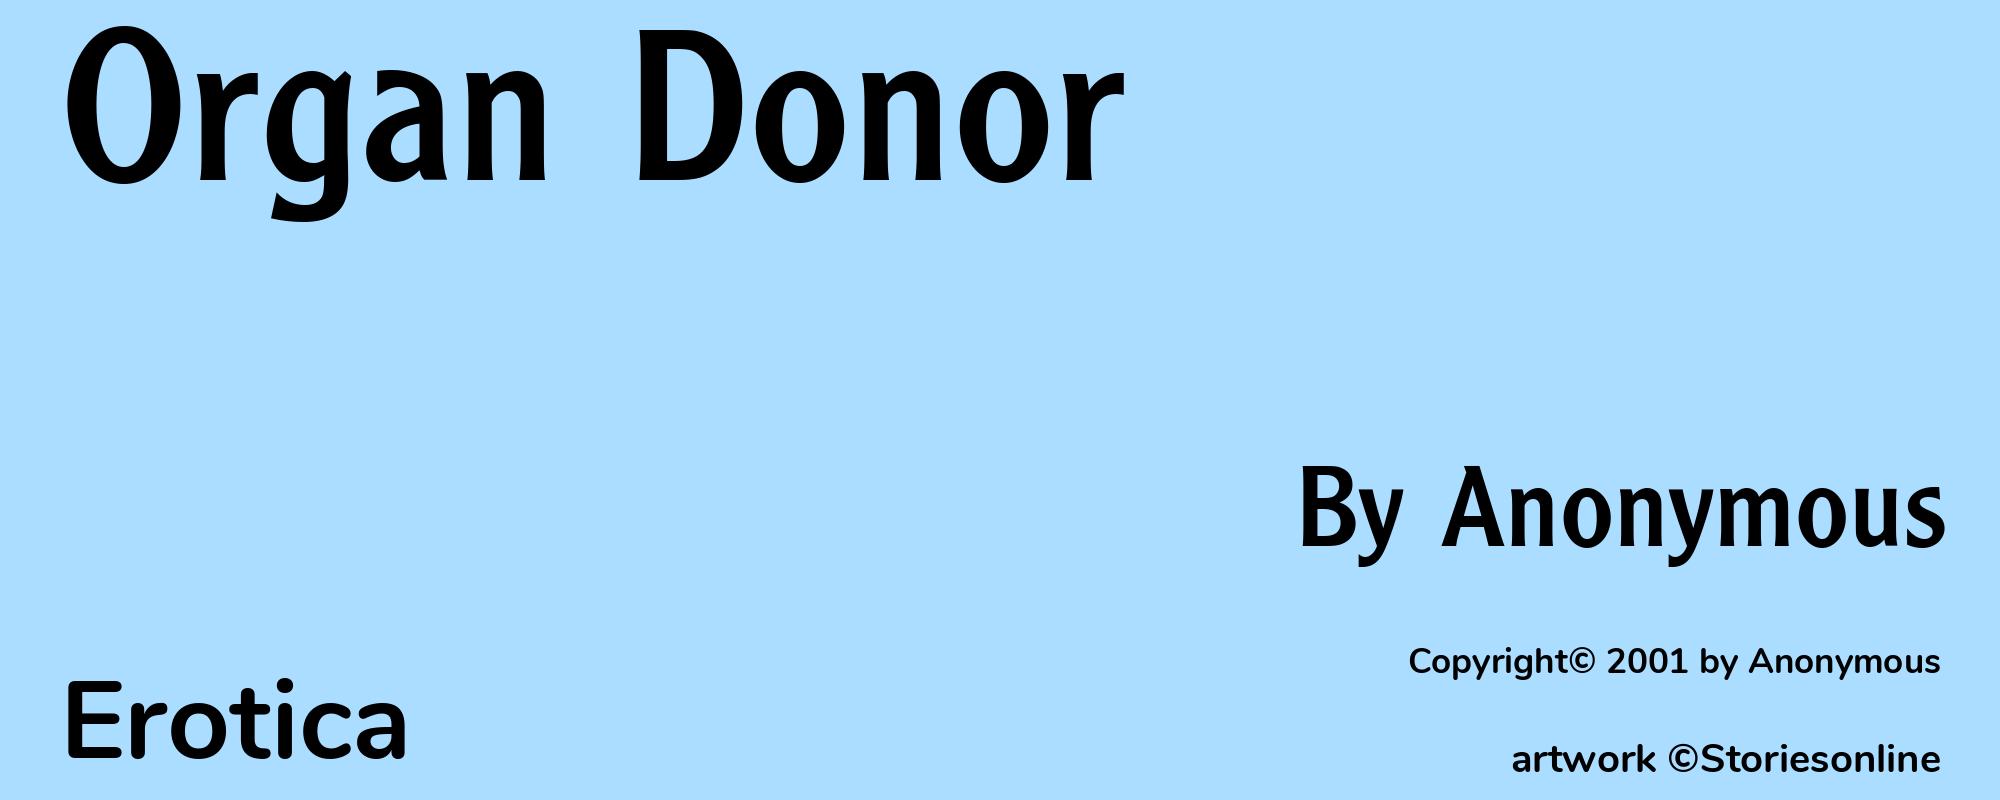 Organ Donor - Cover